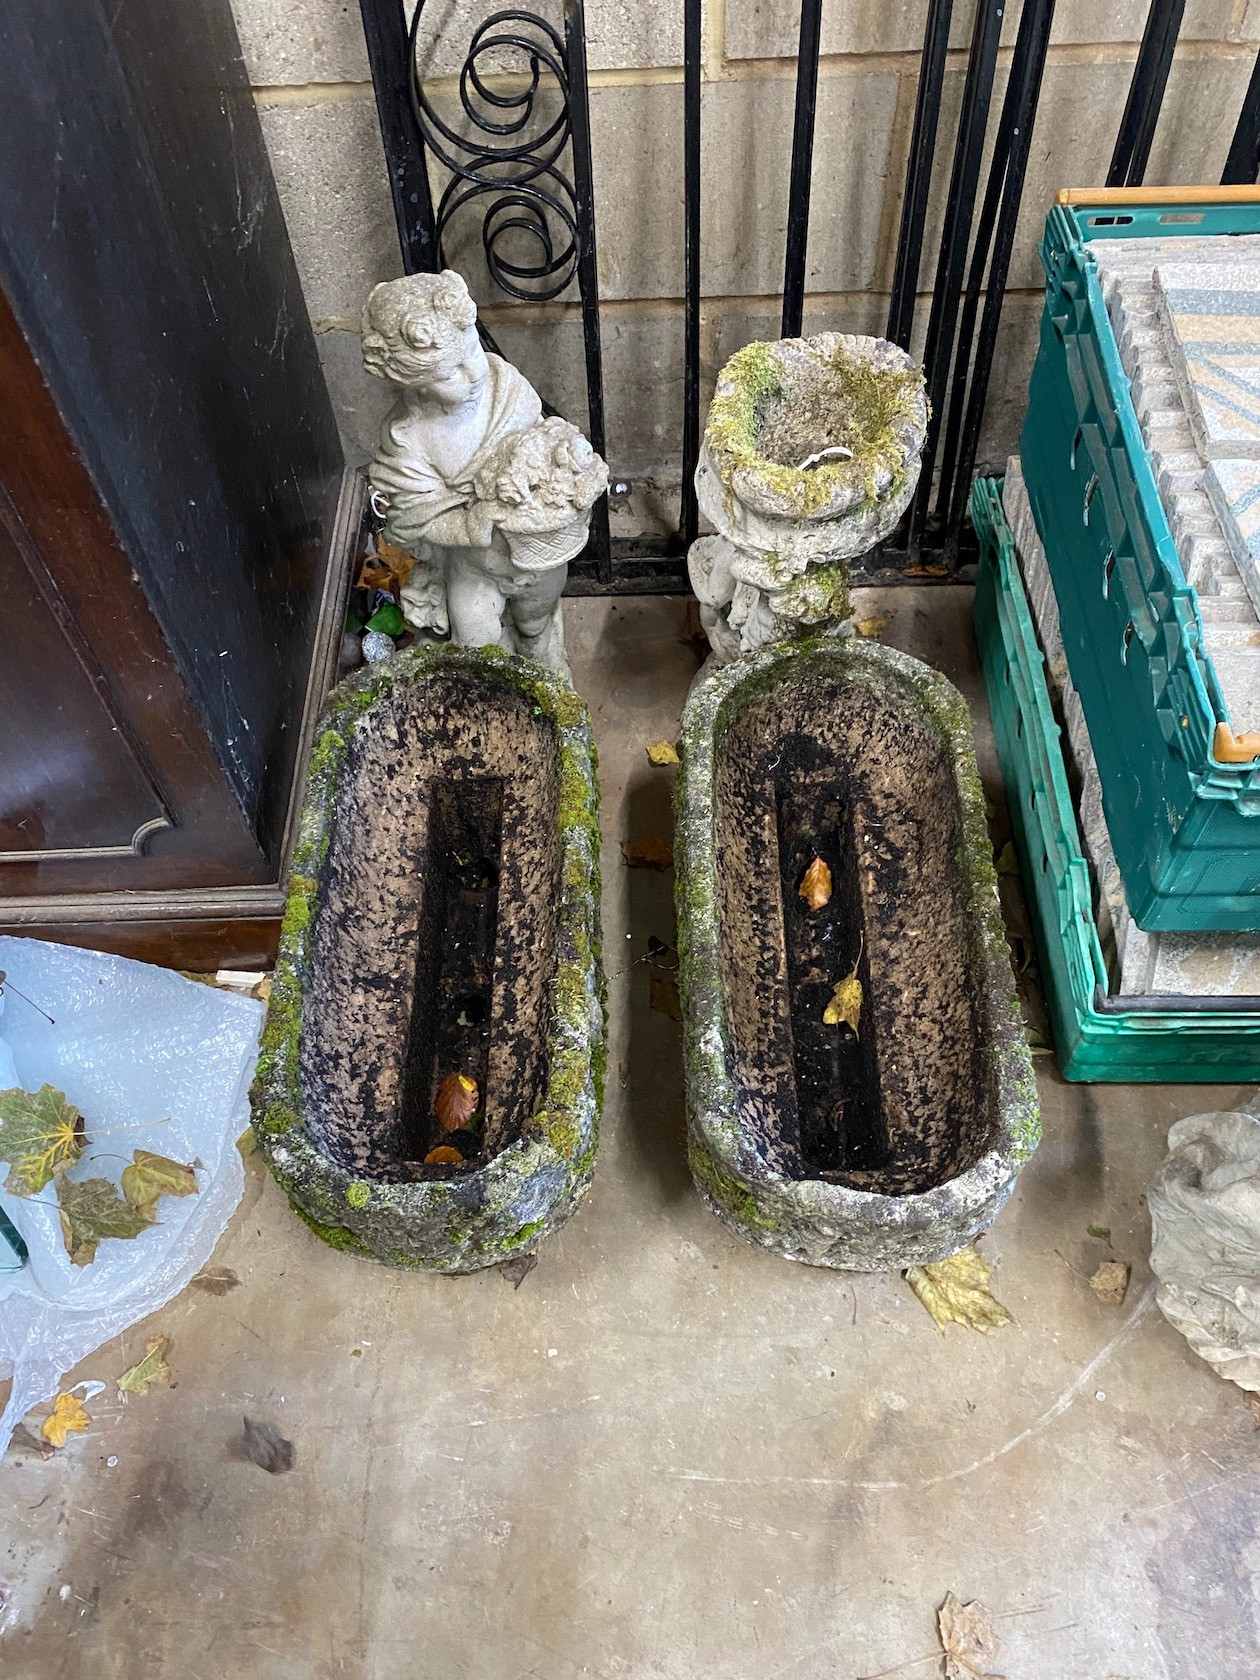 A small pair of rounded rectangular garden planters, a bird bath and two garden figures